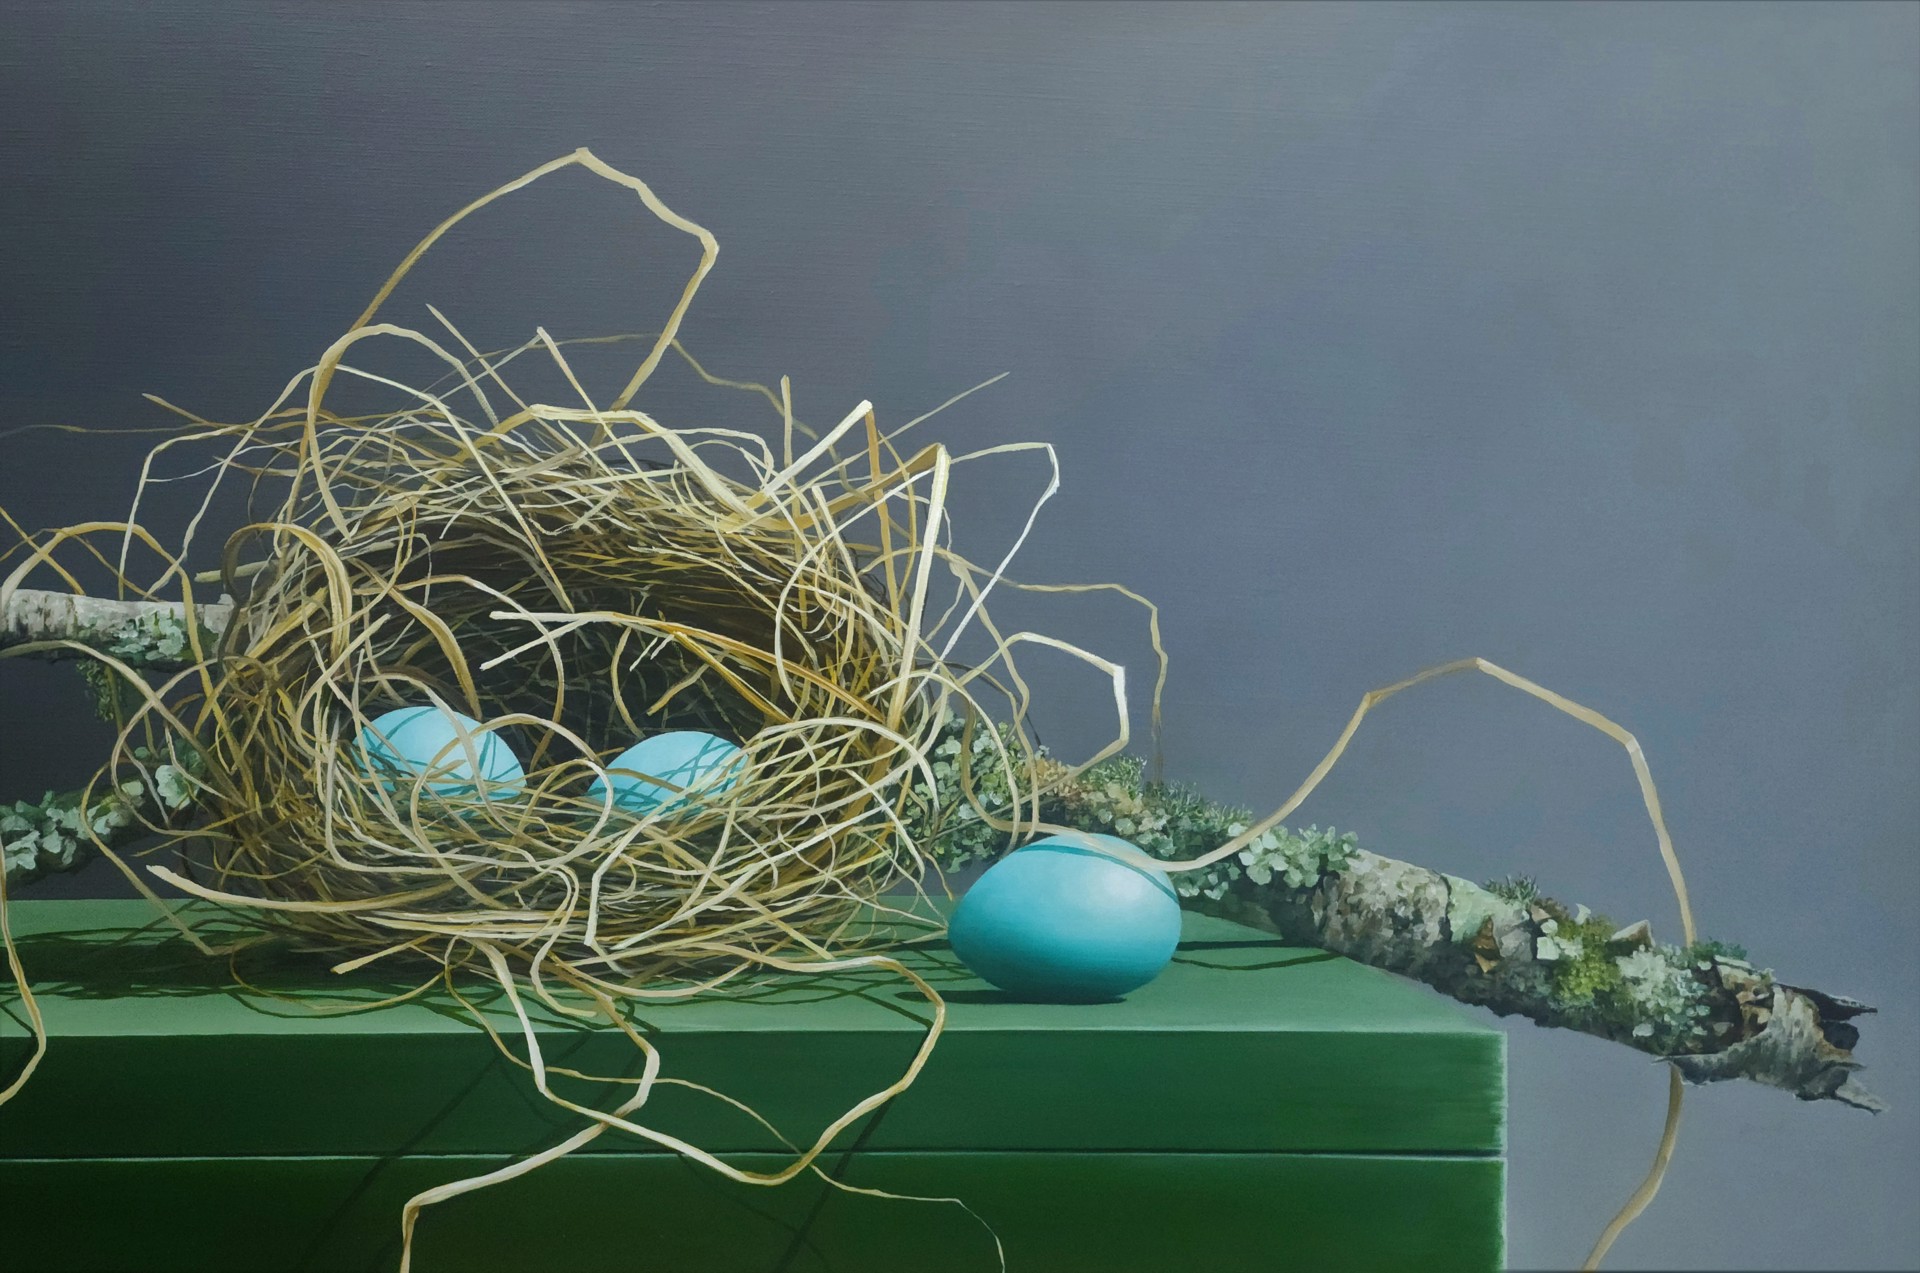 Nest with Eggs by Loren DiBenedetto, OPA